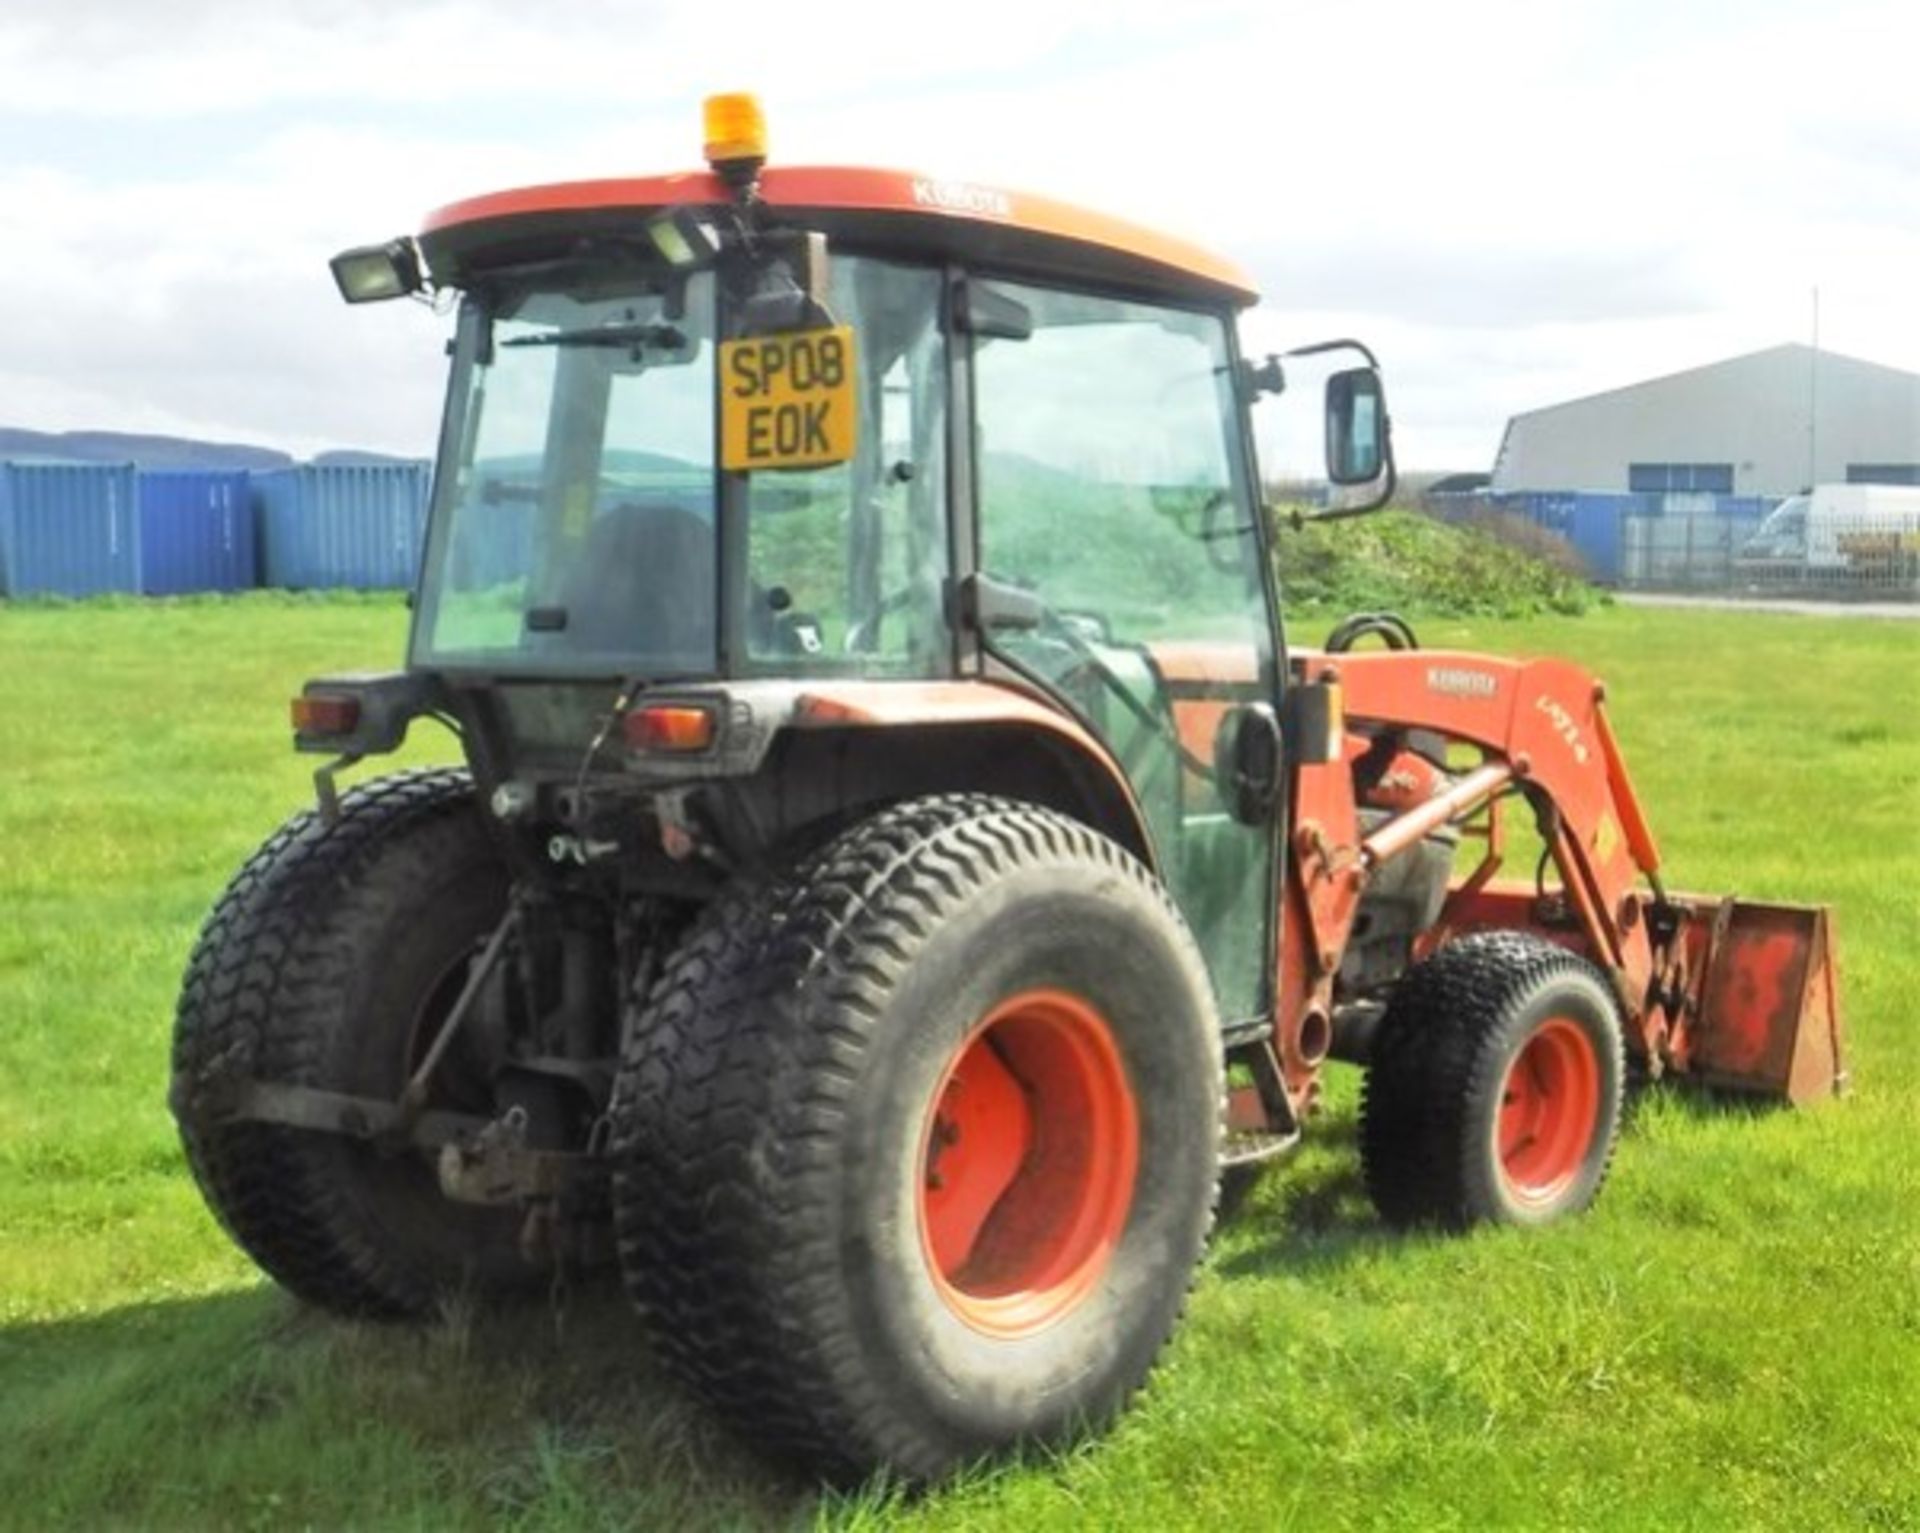 KUBOTA L4240 tractor c/w loader model LA714. Reg No SP08 EOK, s/n 3029671535. 3285 hrs (not verified - Bild 13 aus 17